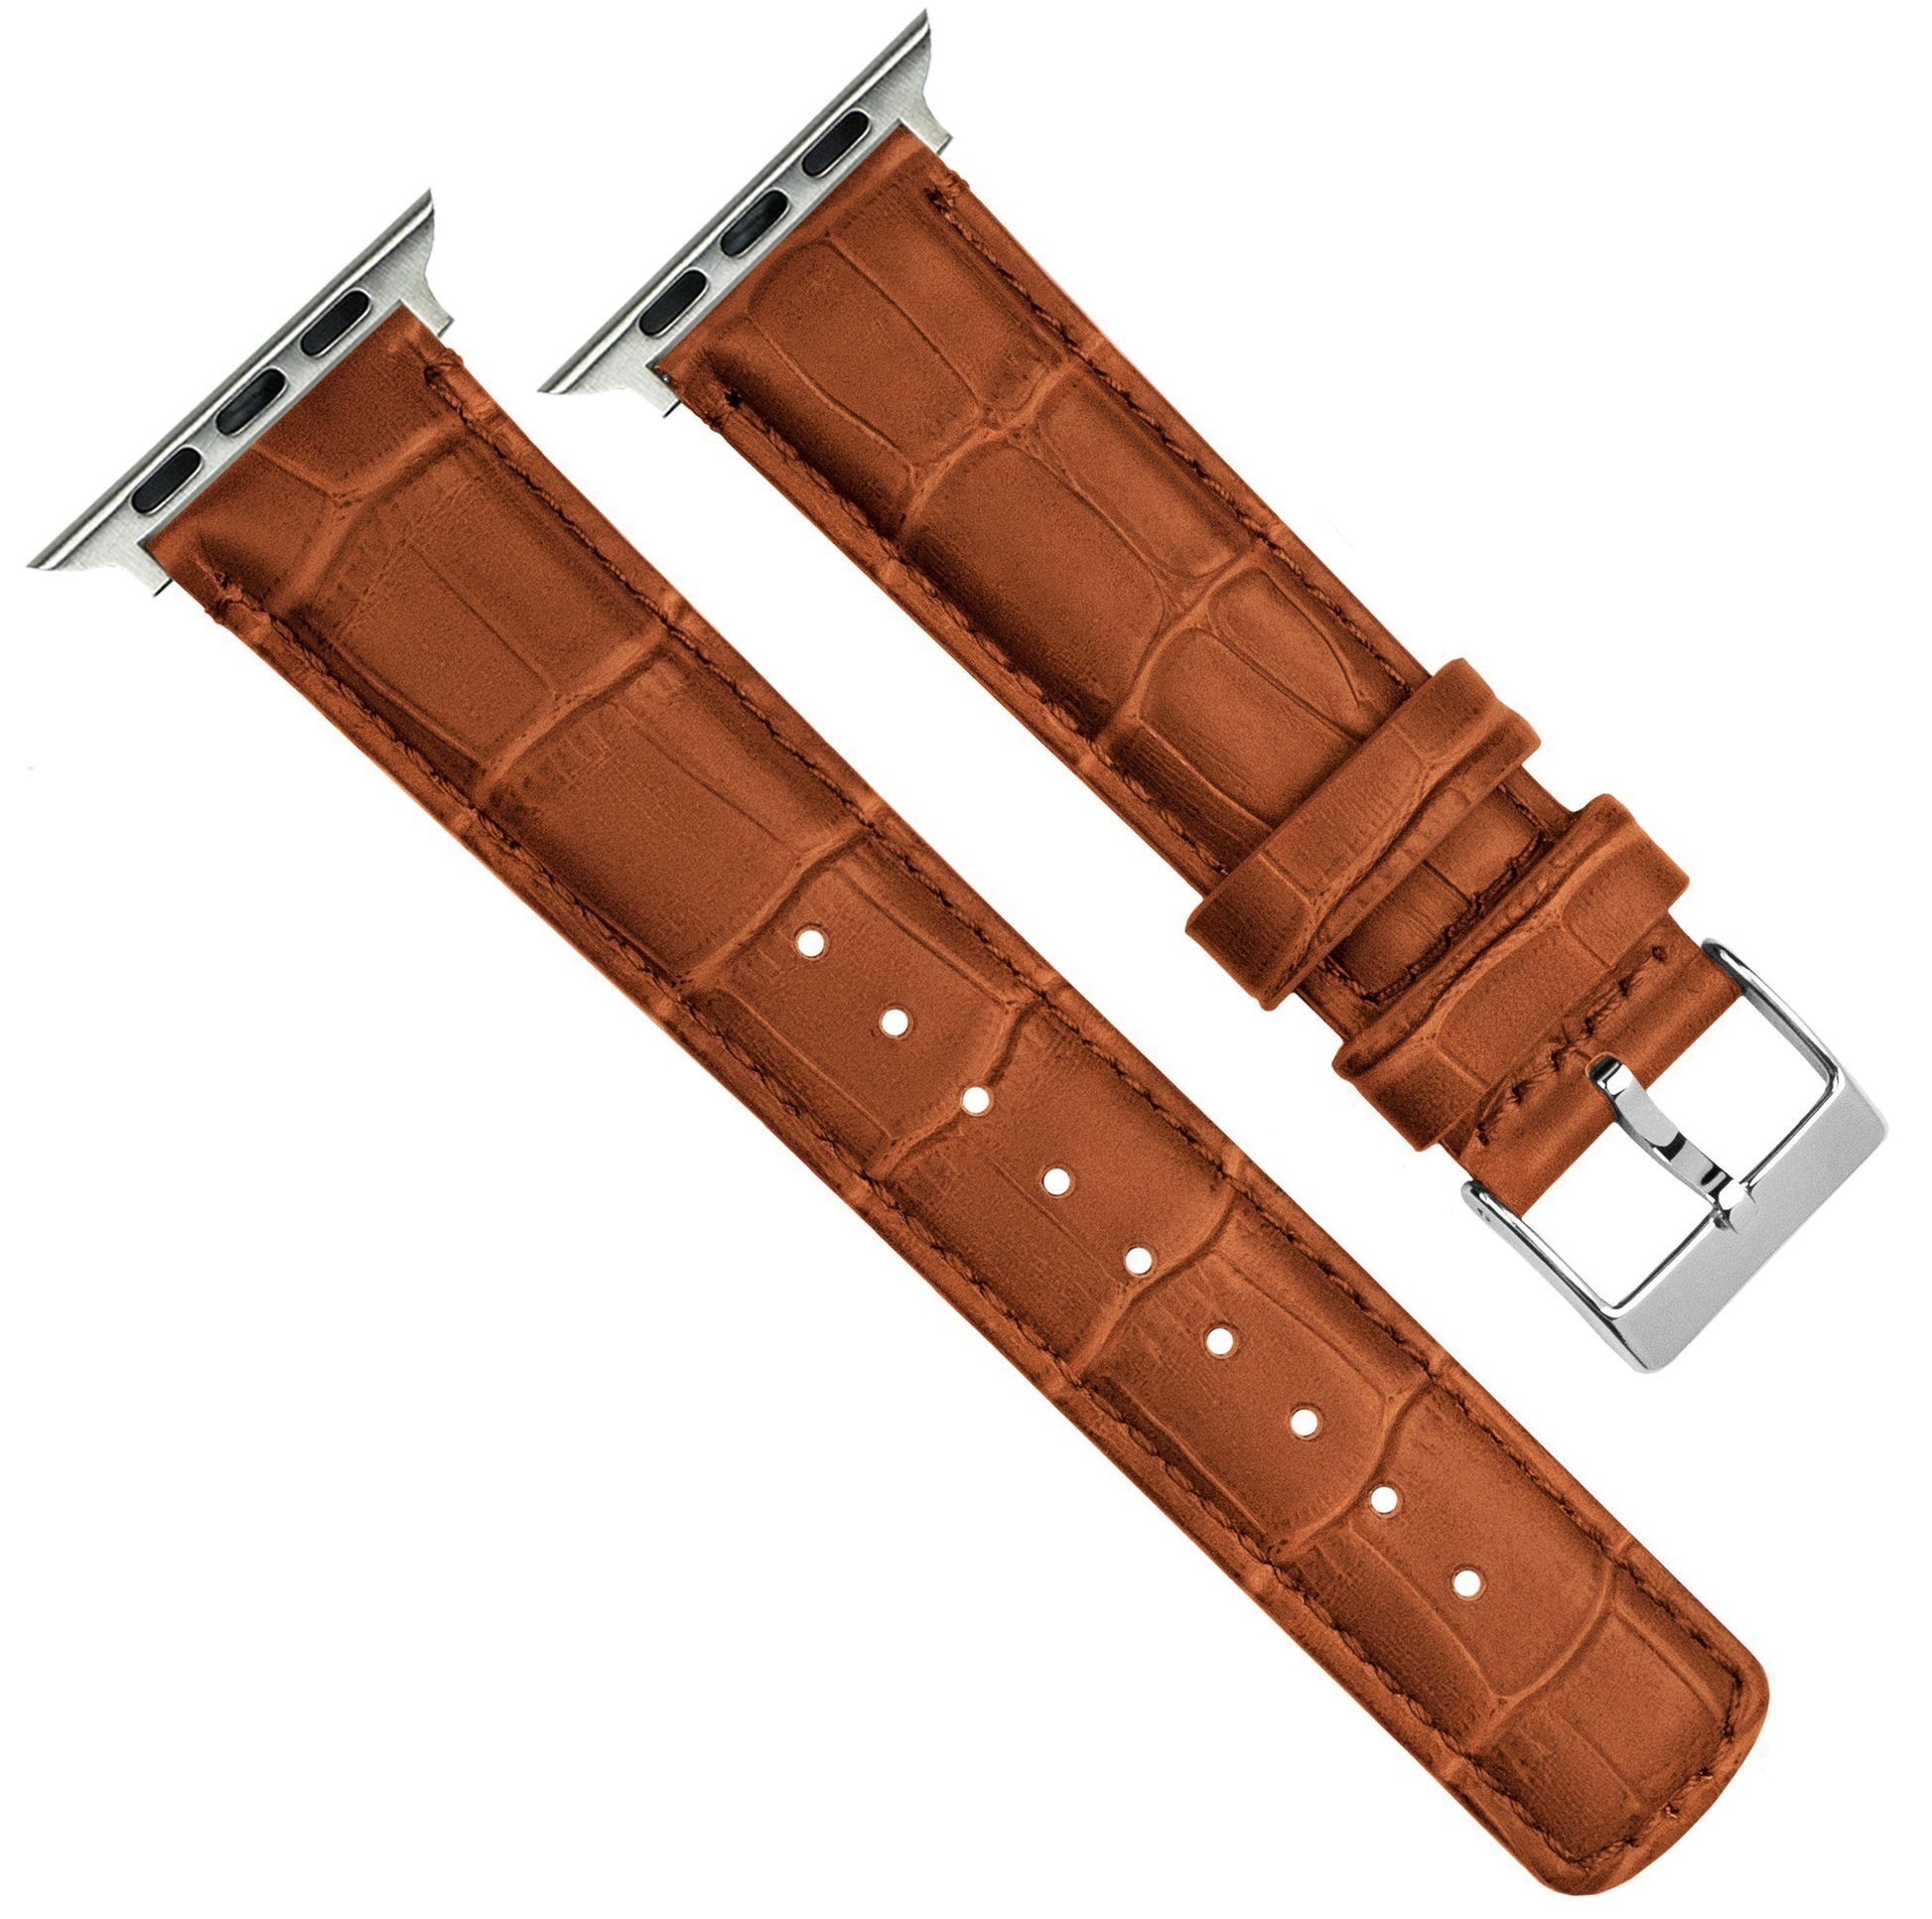 Apple Watch | Toffee Brown Alligator Grain Leather - Barton Watch Bands